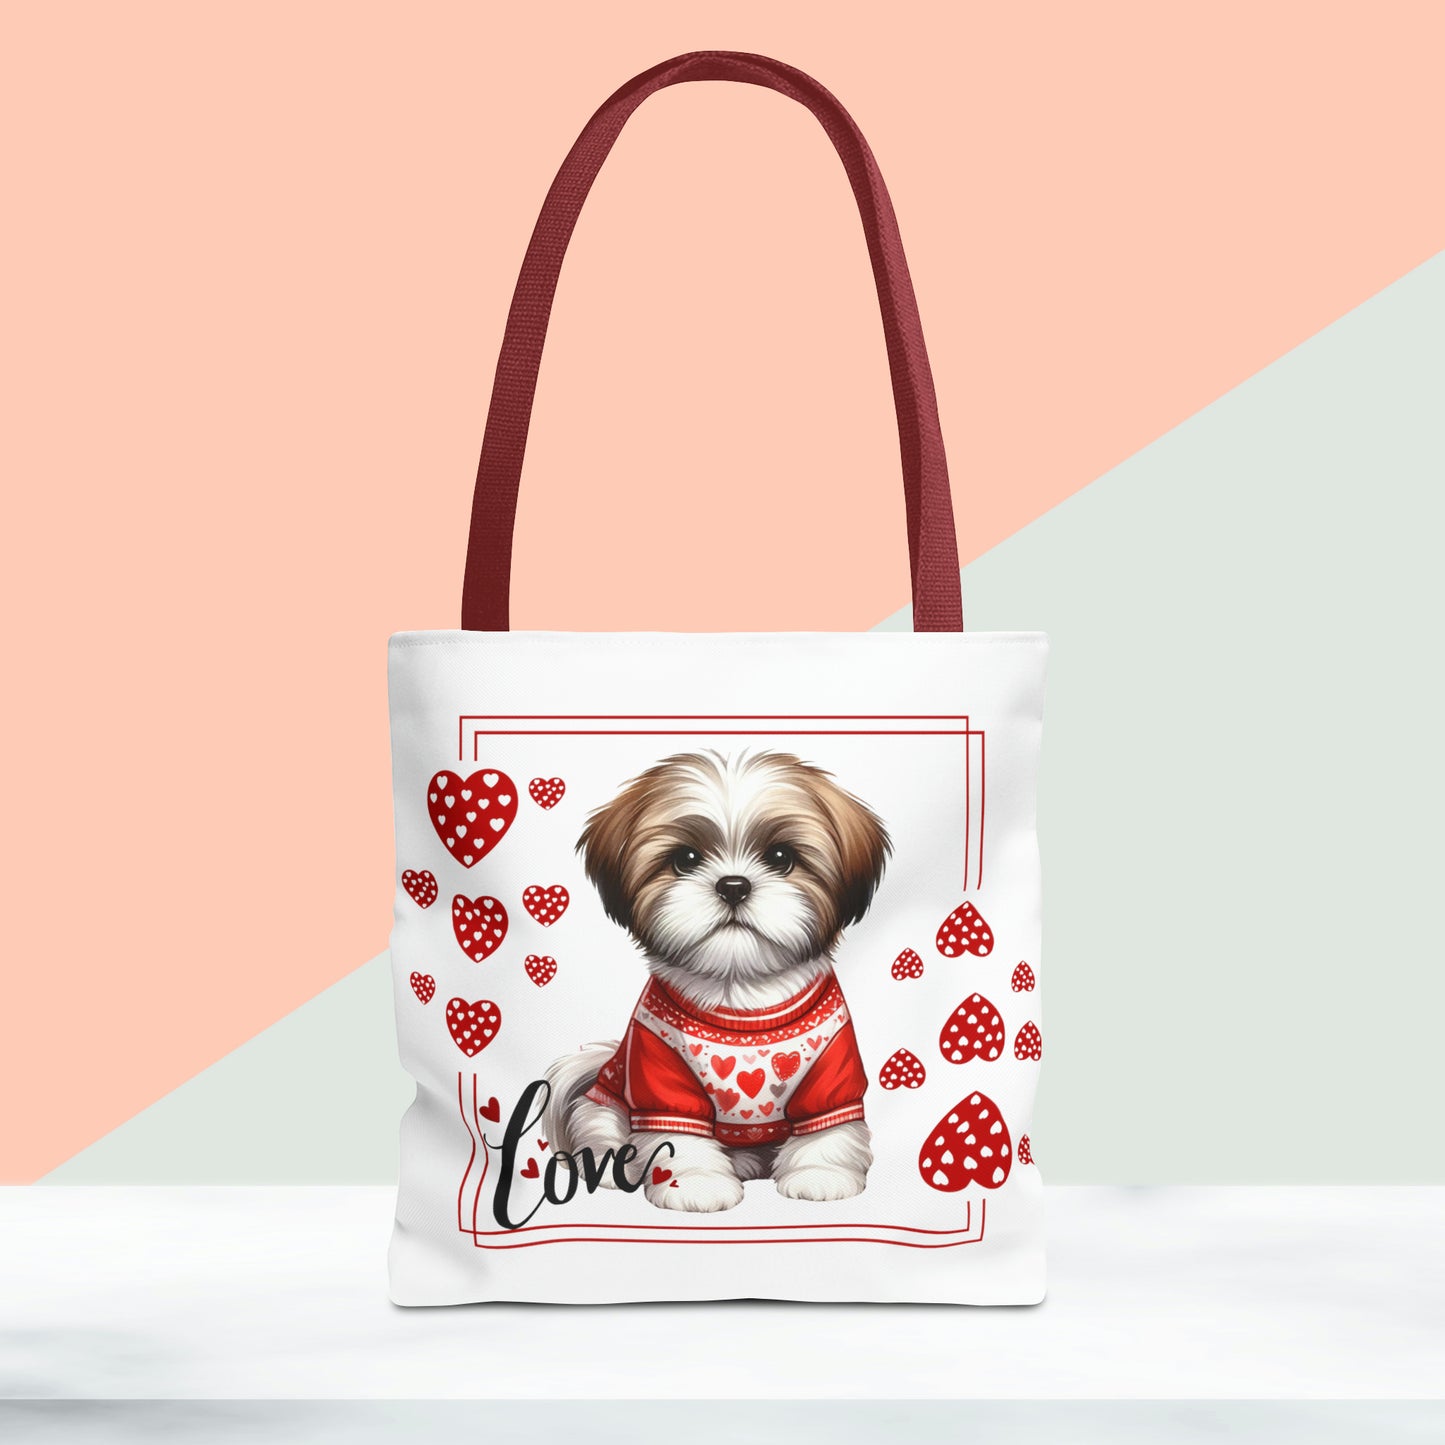 Happy Valentines Day Tote Bag